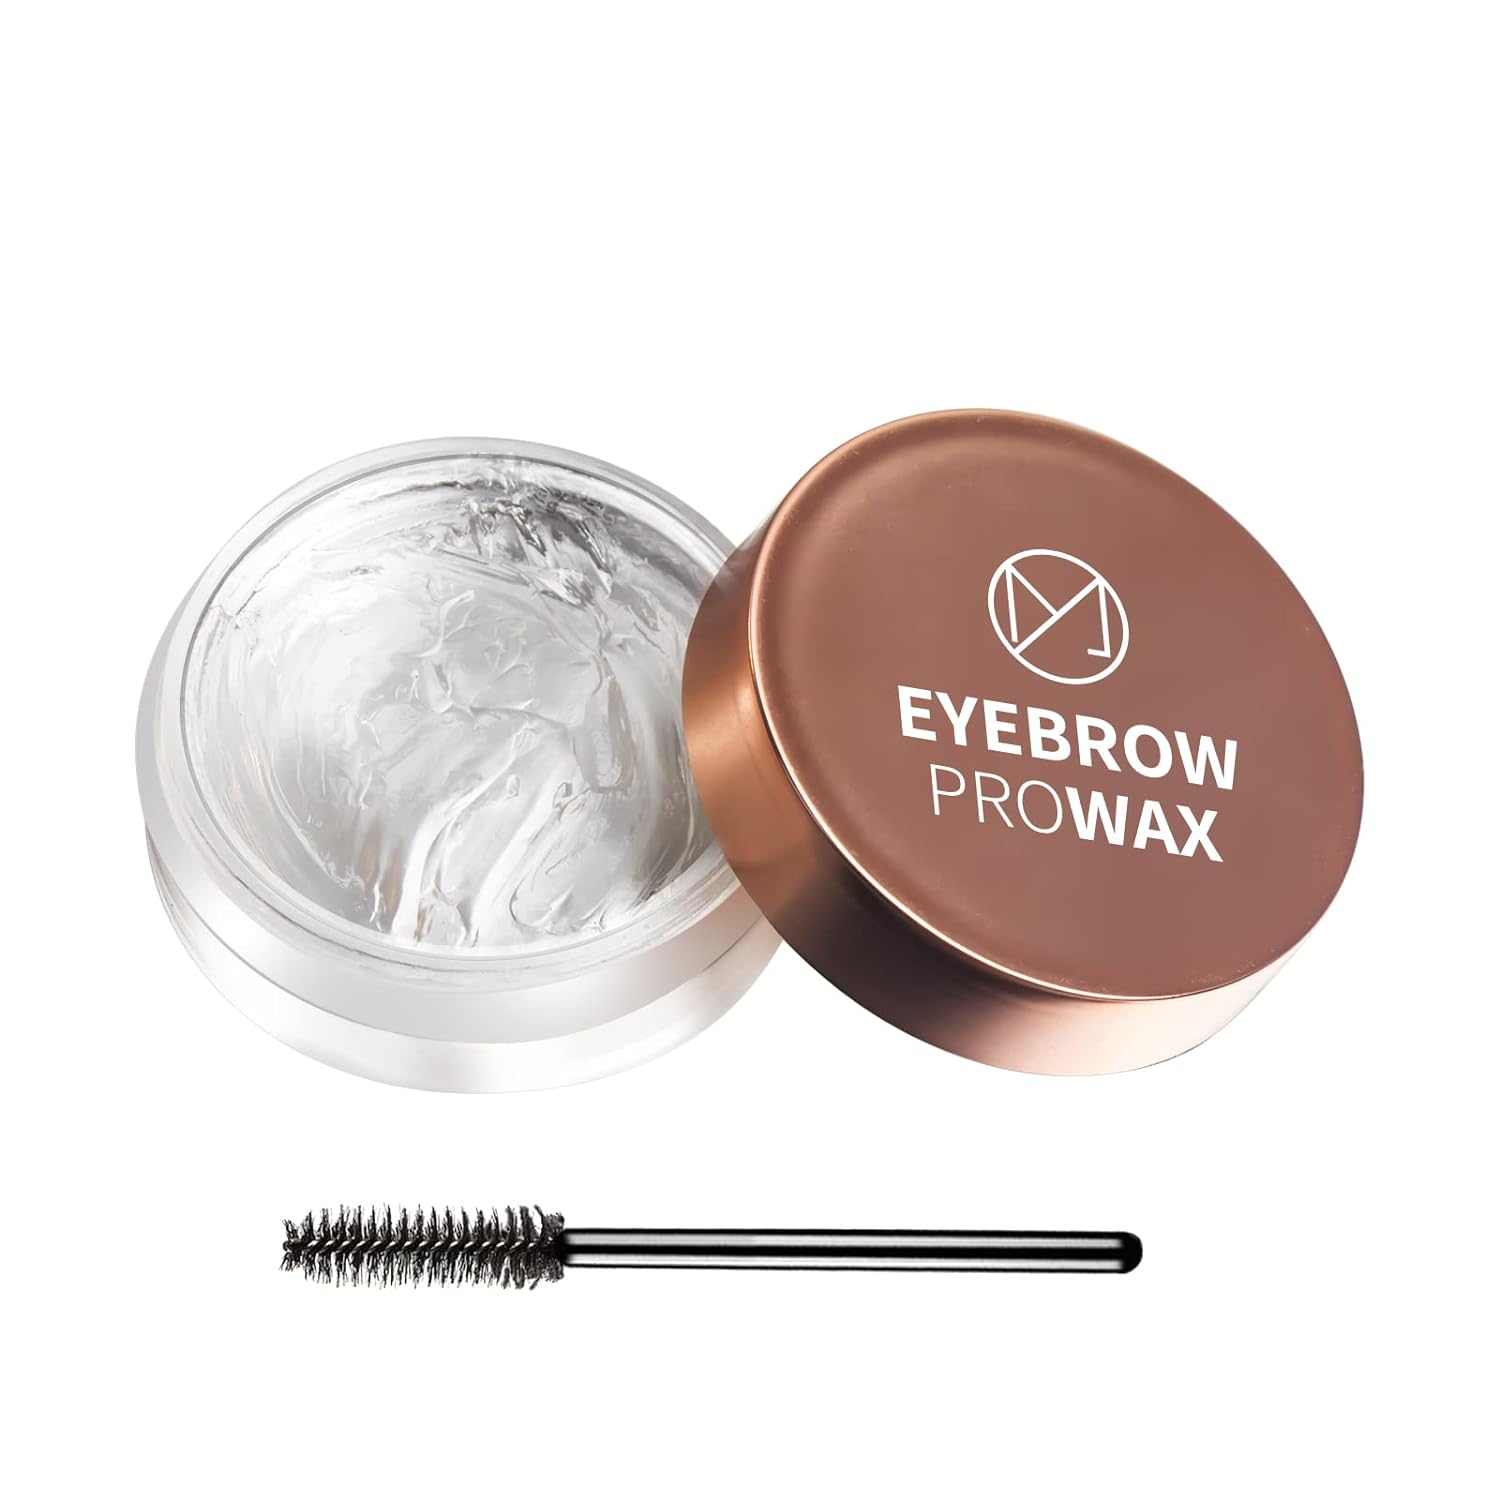 Eyebrow Wax Brow Gel - Brow Styling Wax for Feathery & uffy & Brow Freeze, Clear Eyebrow Gel, Brow Soap, Long Lasting Eyebrow Makeup for Lamination Effect (1pcs)